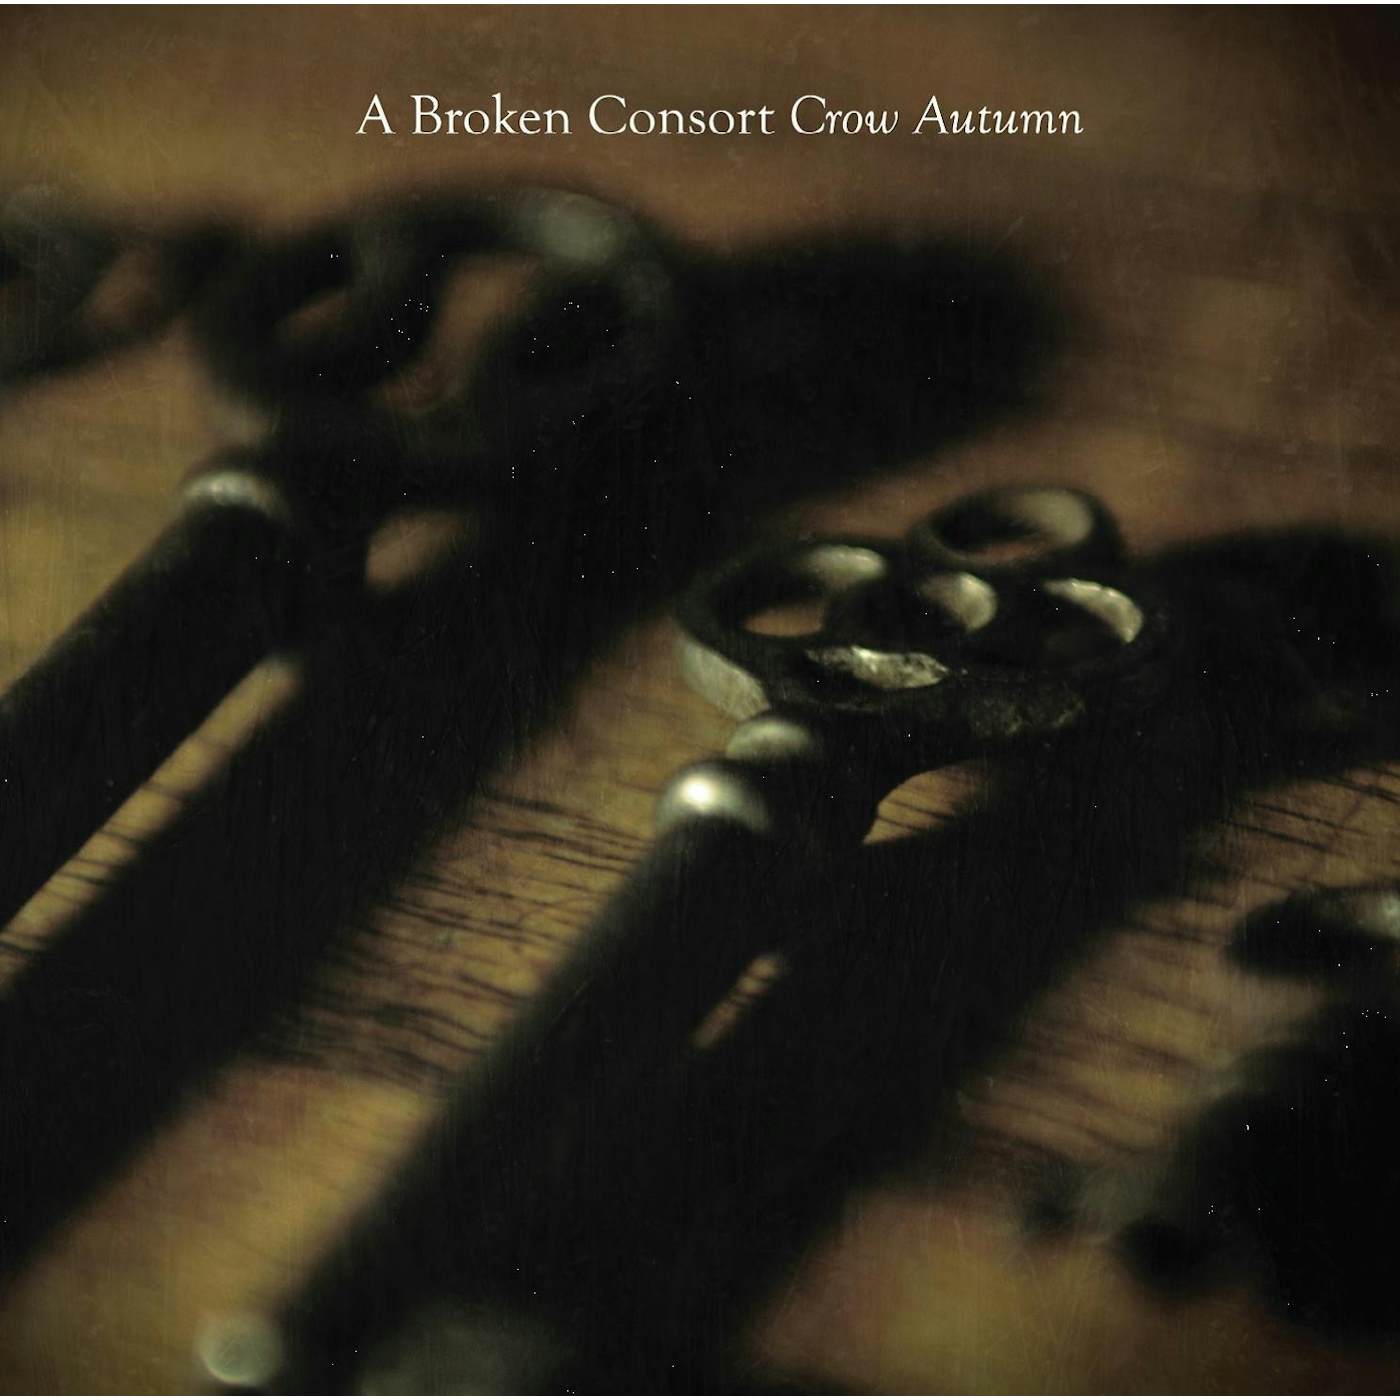 A Broken Consort 'Crow Autumn' Vinyl Record